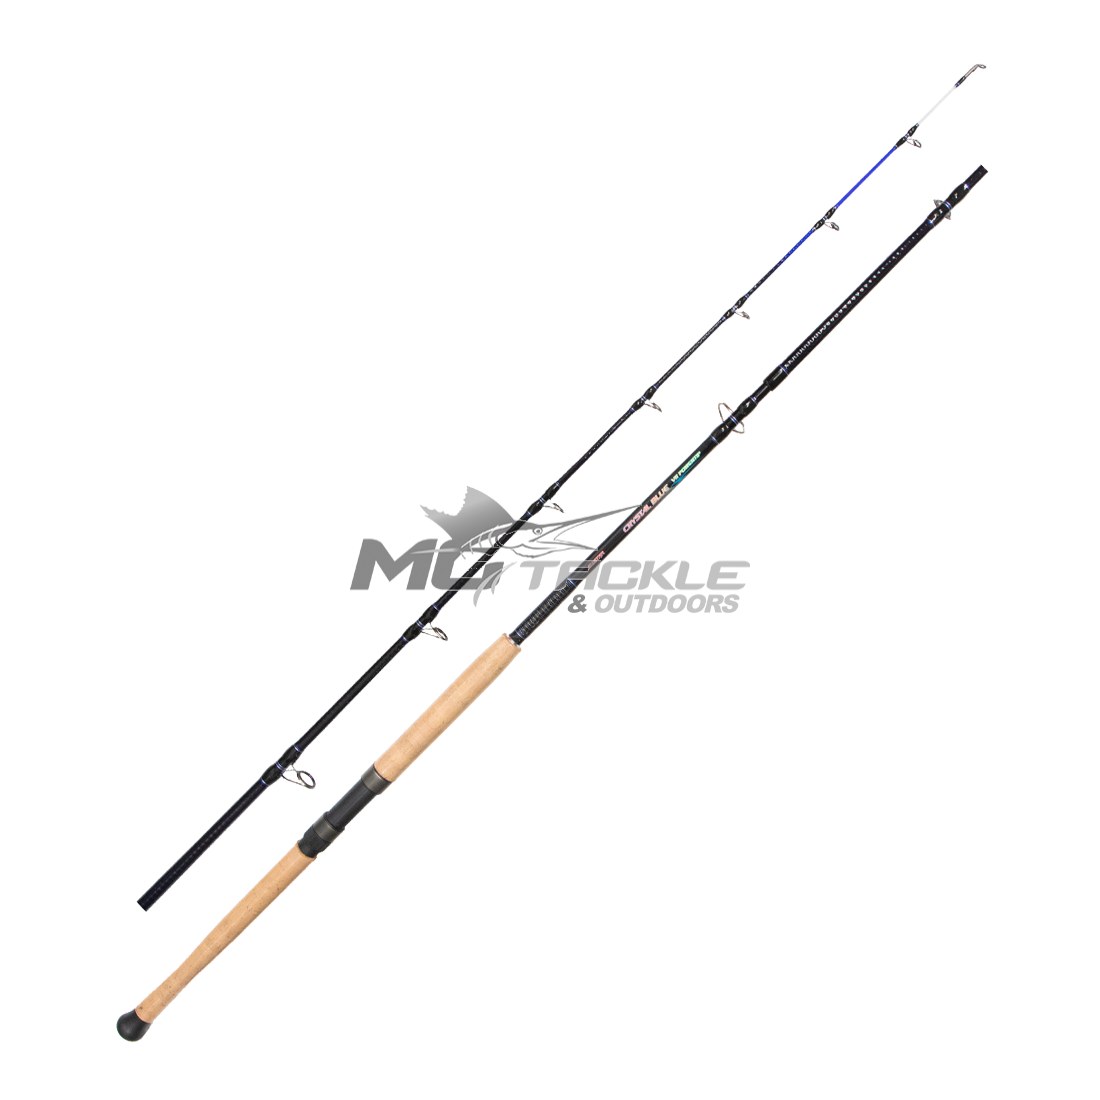 Silstar Power Tip 6-10kg 6'6 2 Piece Fishing Rod - Boat Rod